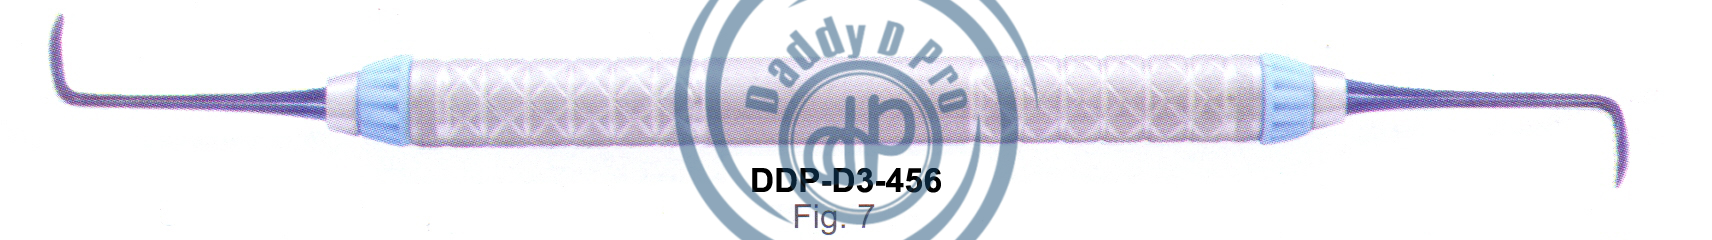 images/DDP-D3-456.png